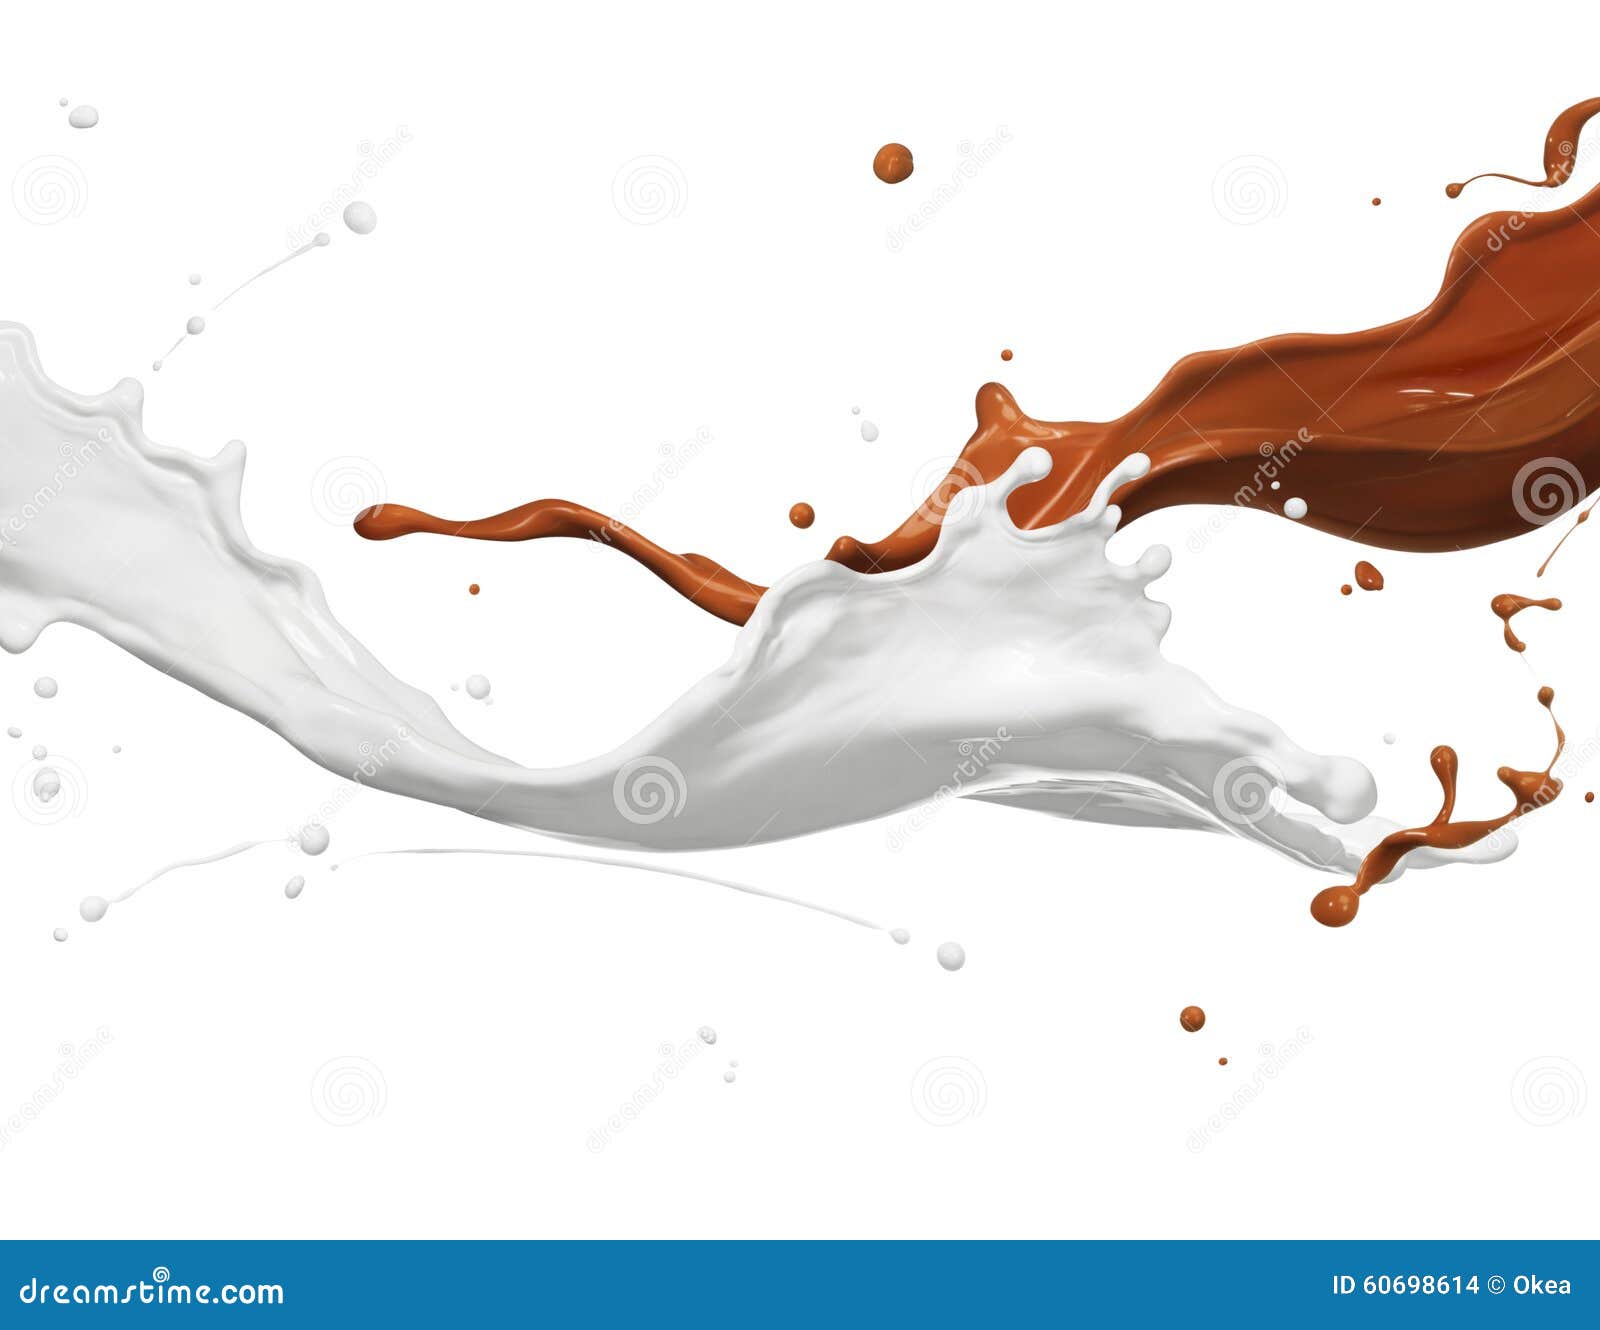 milk and chocolate splash